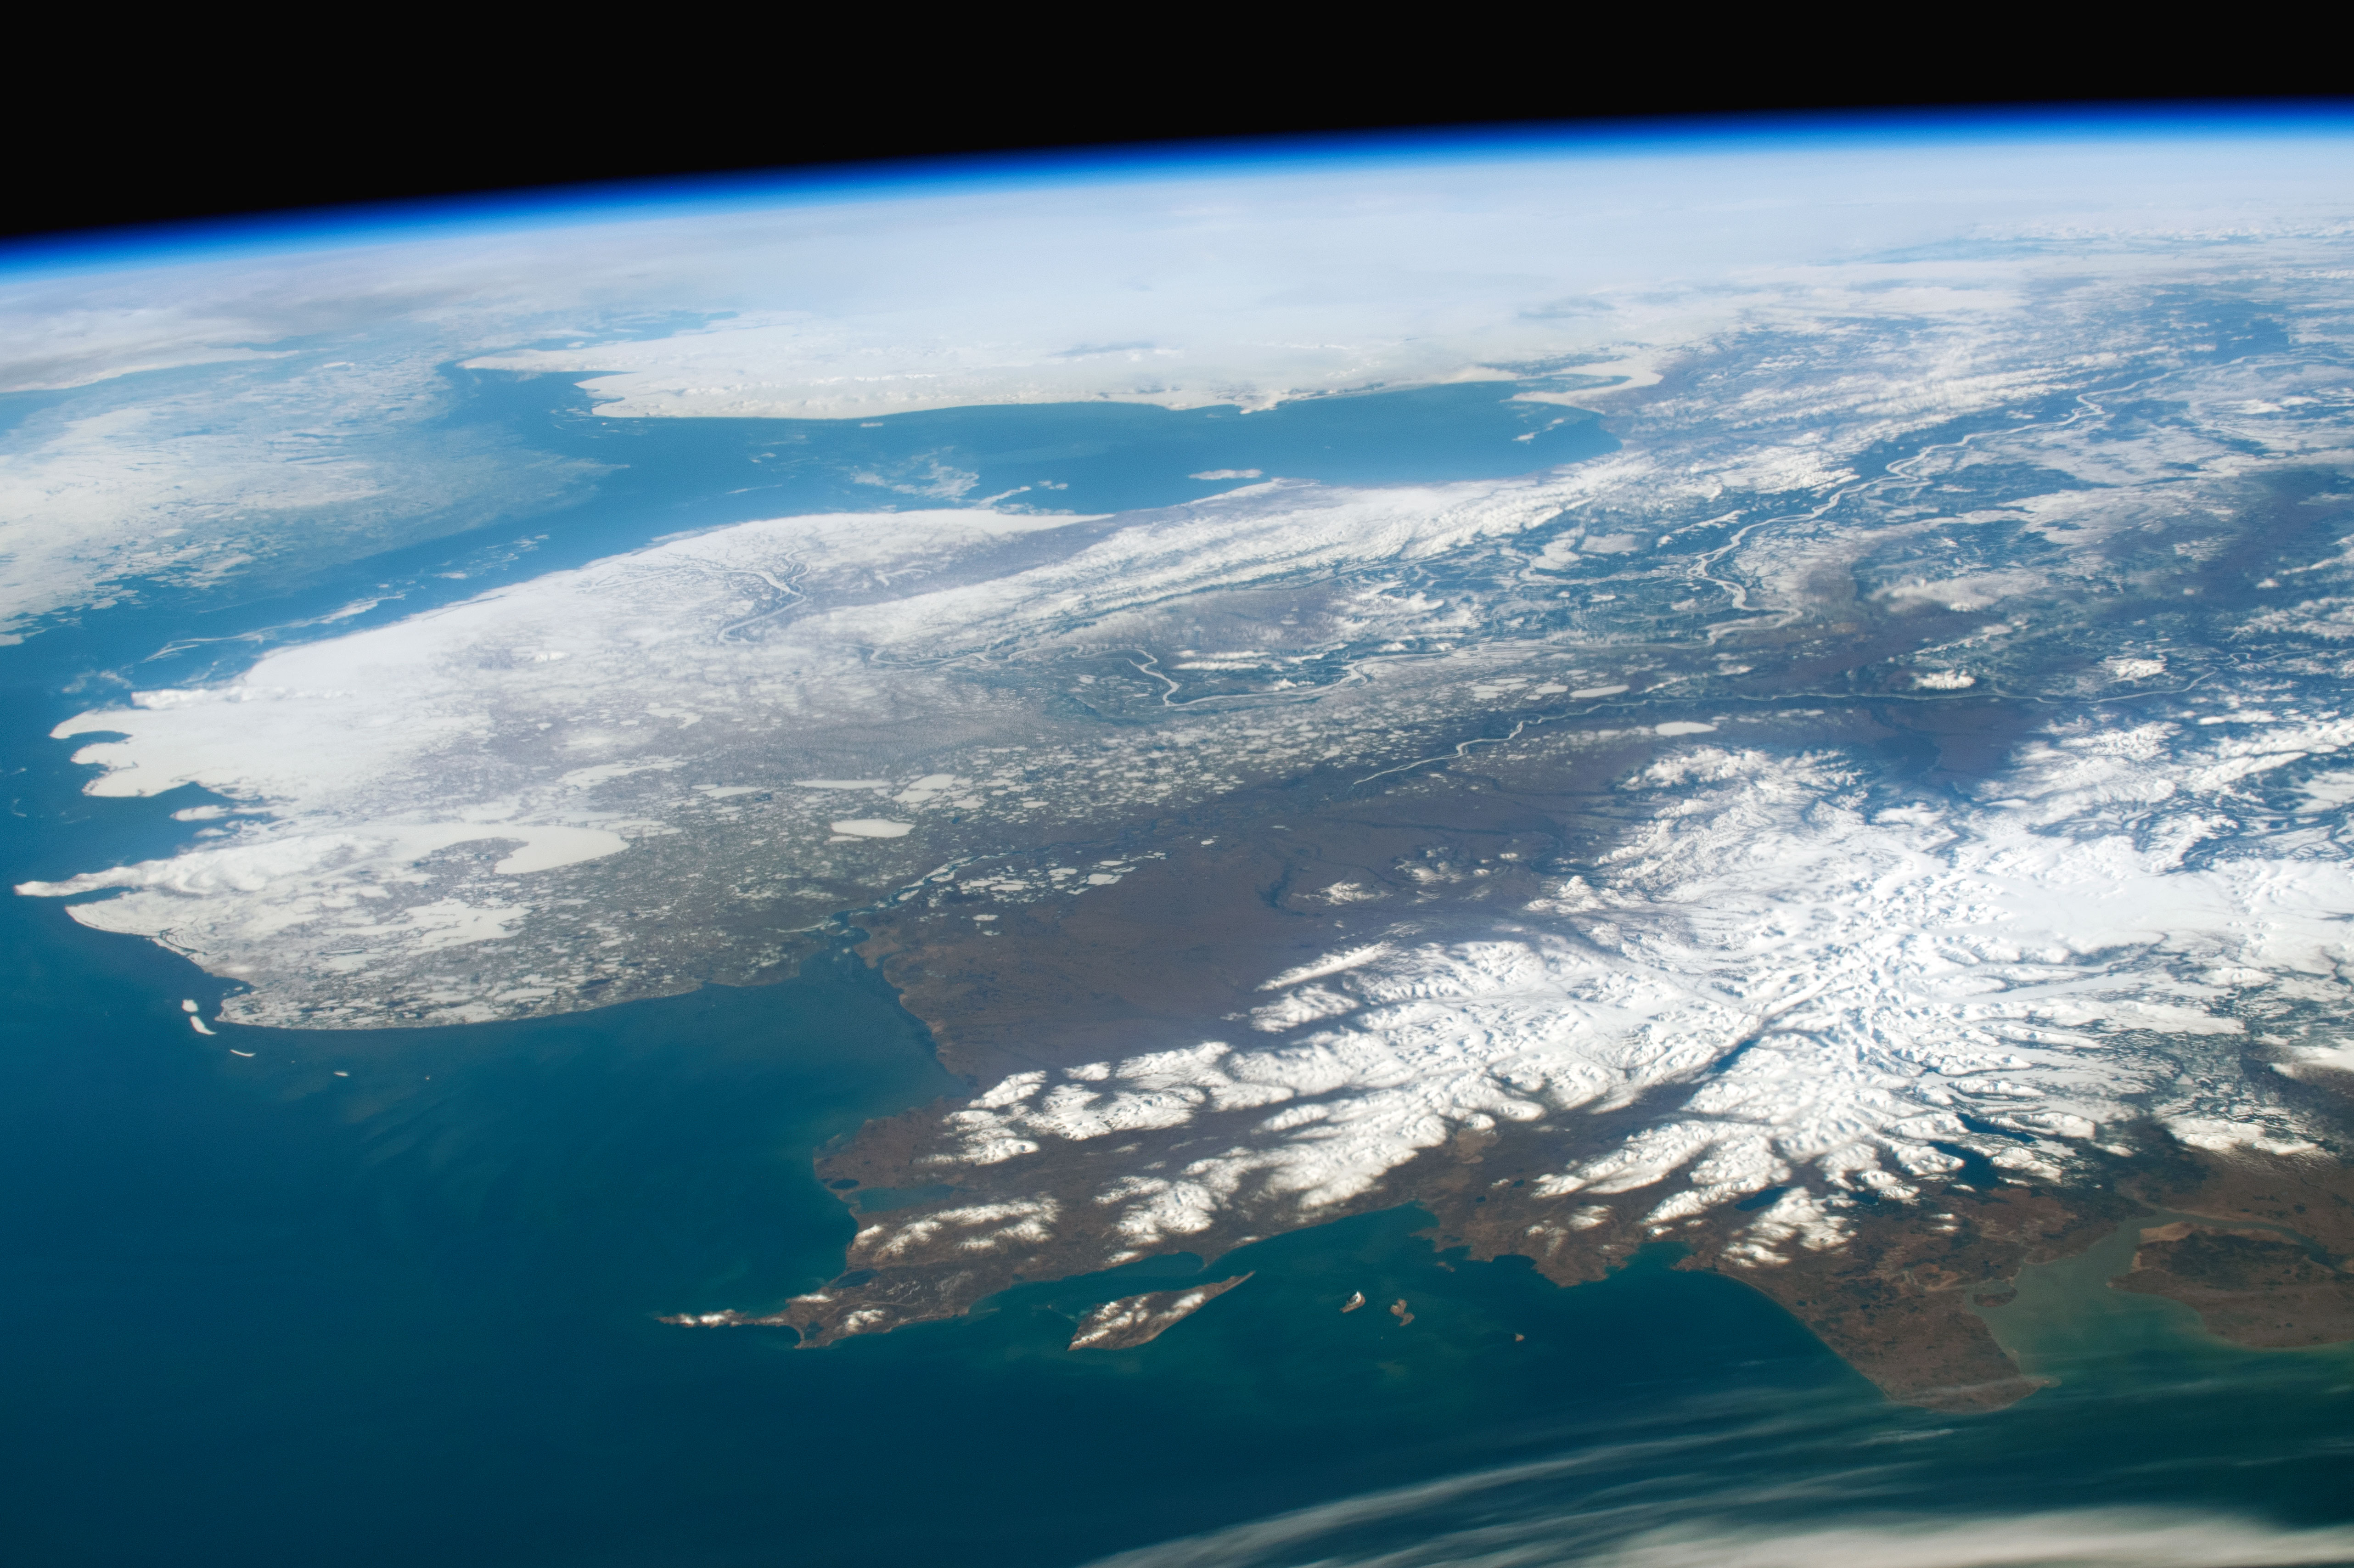 Satellite Photo of Alaska, Bering Strait, Arctic, adapted from image at nasa.gov